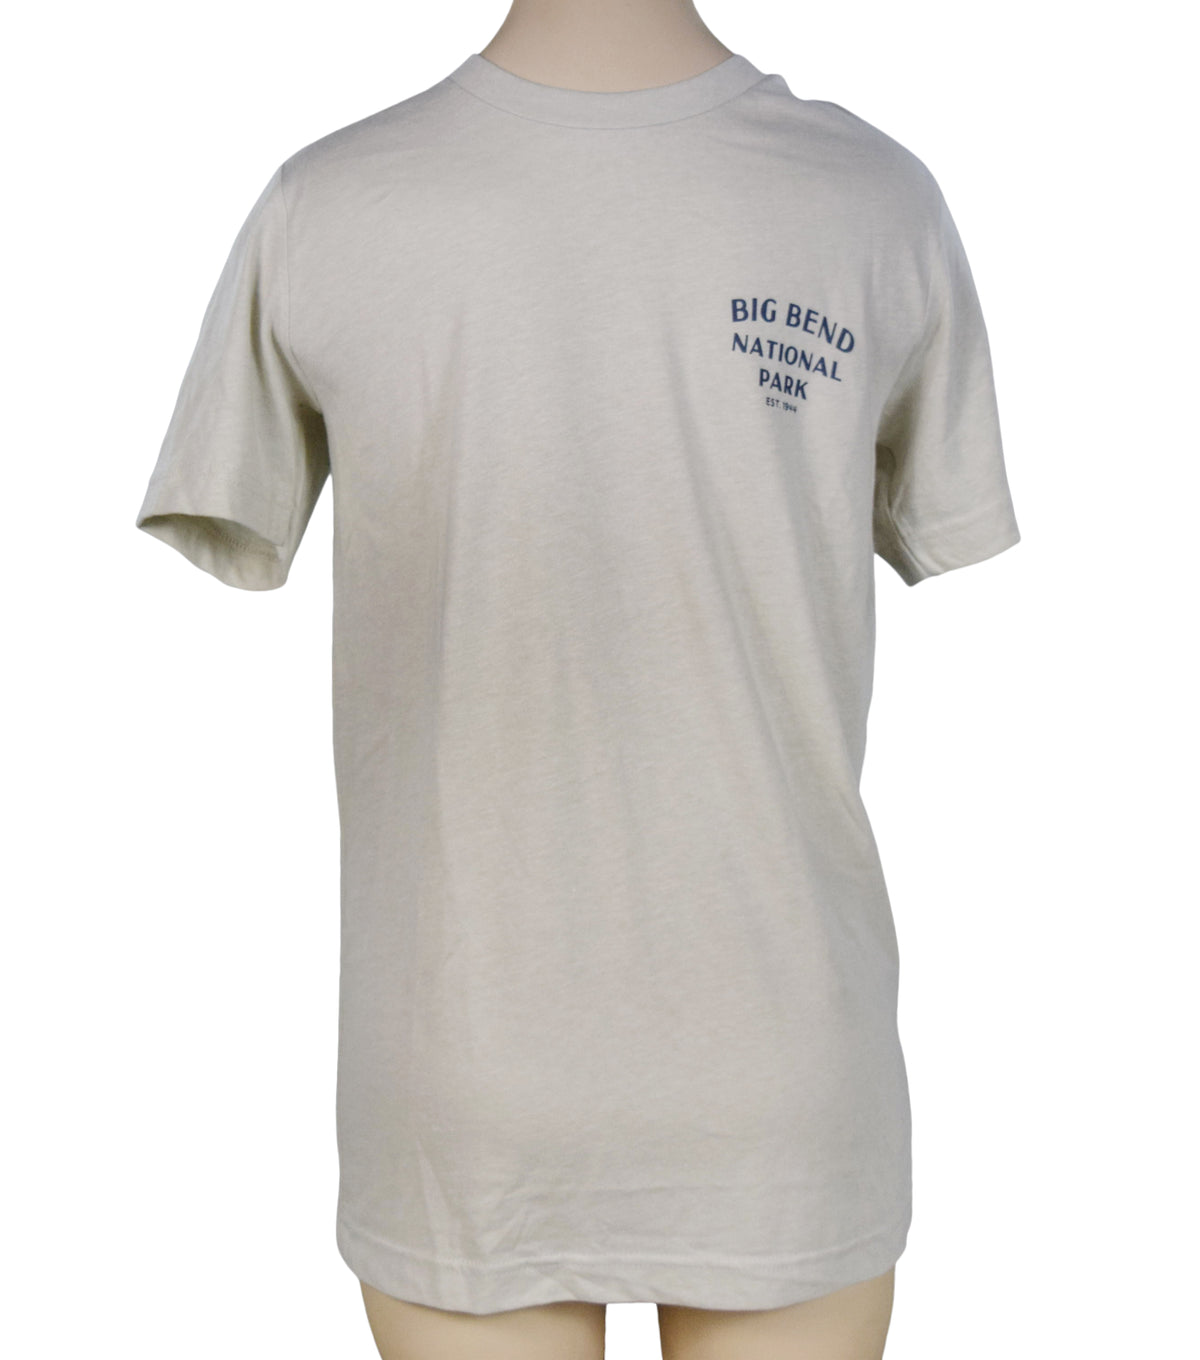 Sendero Provisions Co. Big Bend National Park "Sand" T-Shirt (S)